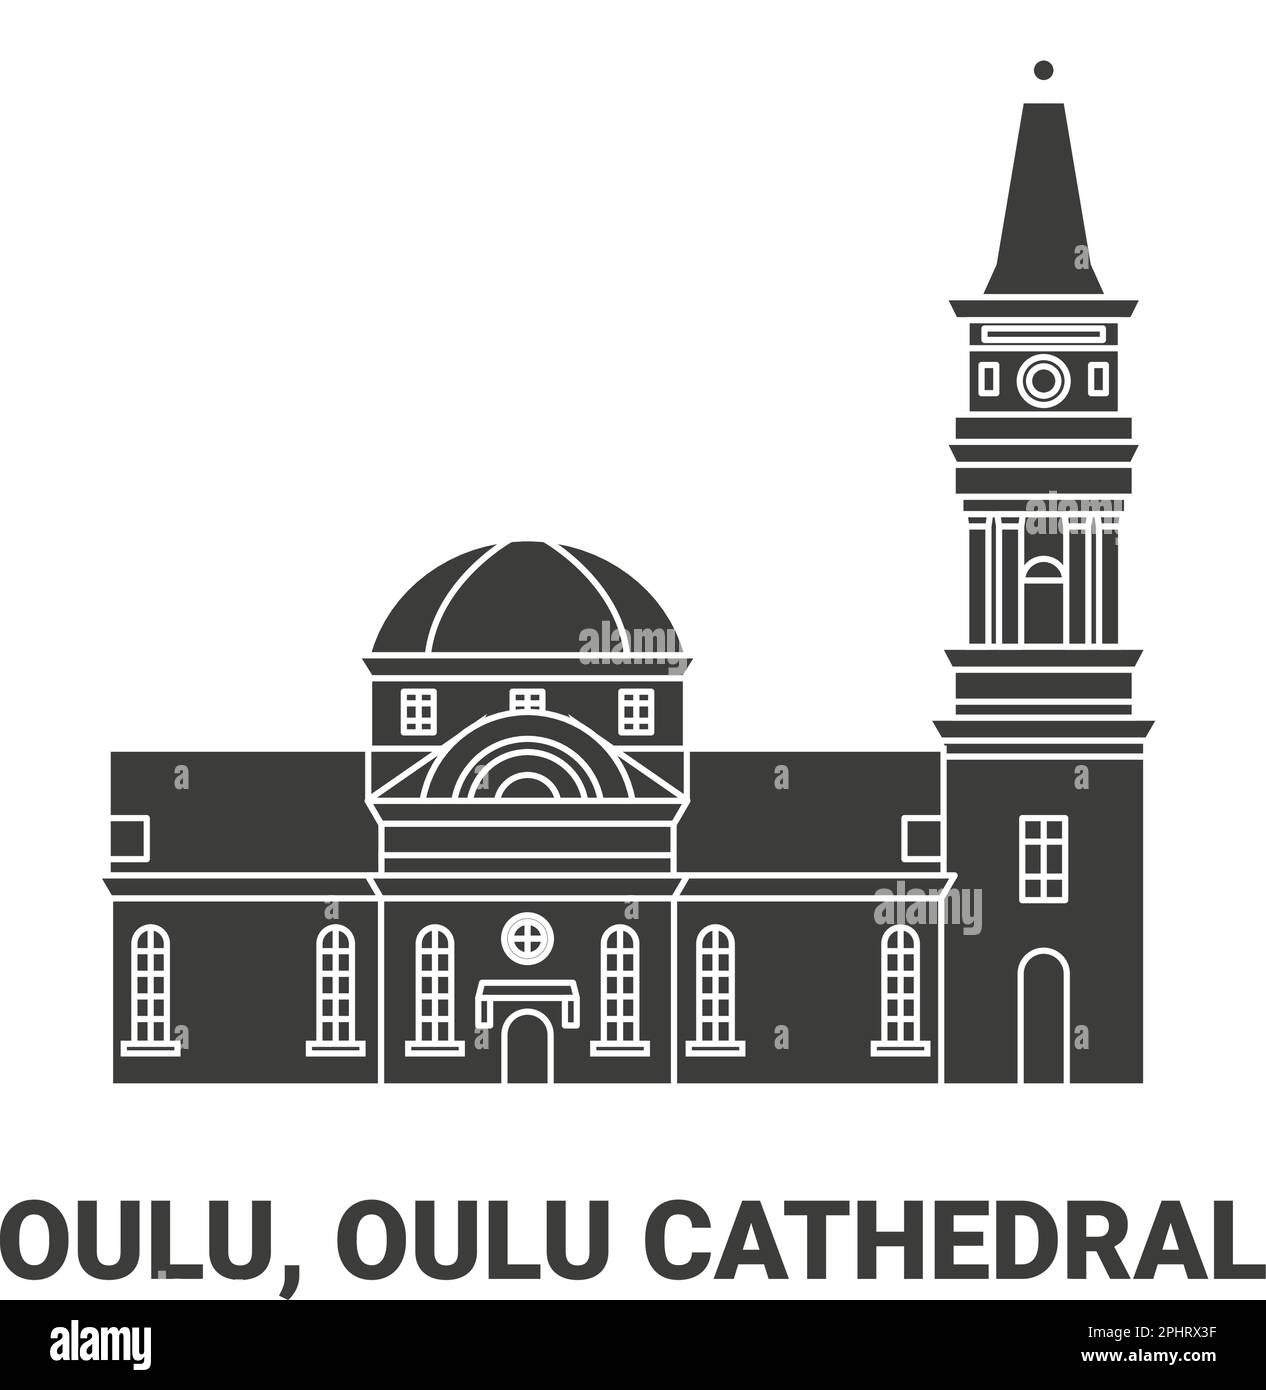 Finland, Oulu, Oulu Cathedral travel landmark vector illustration Stock Vector